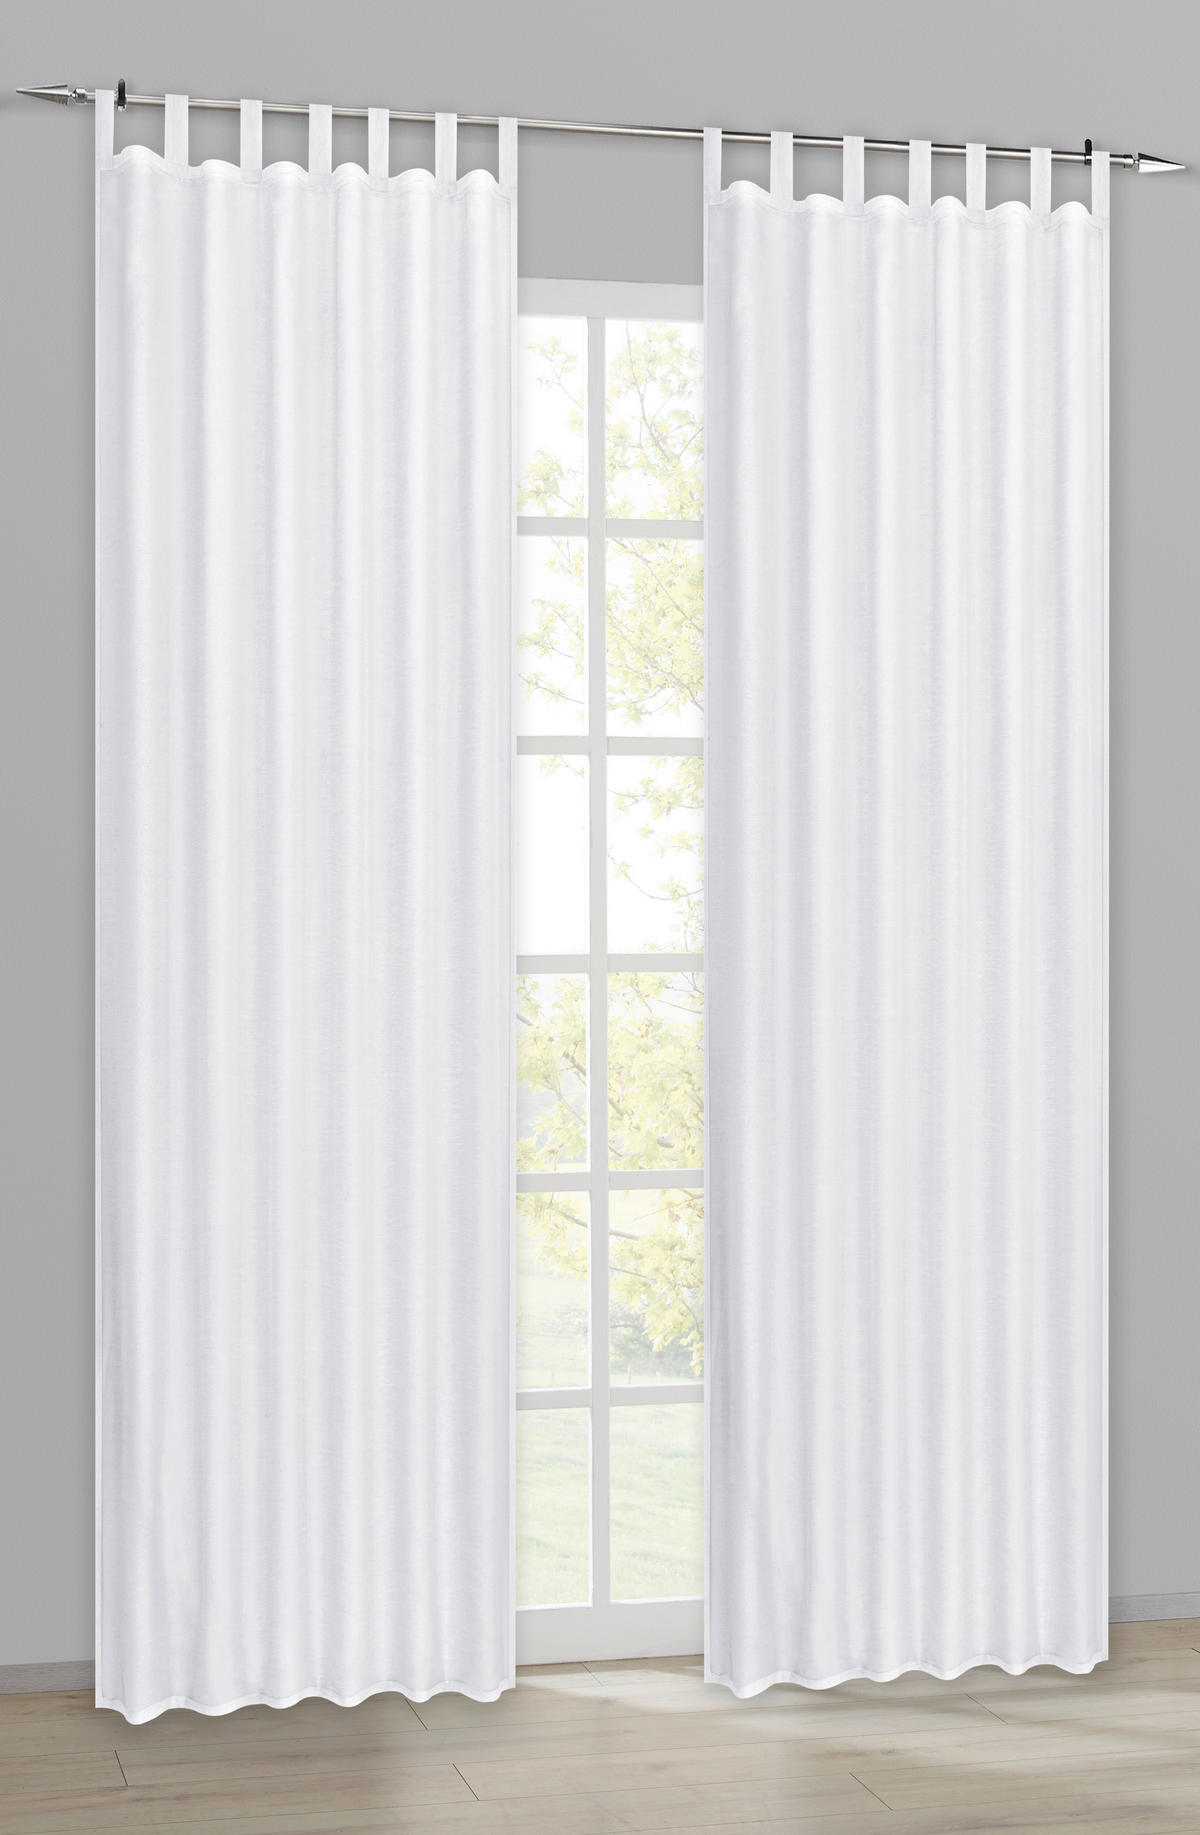 Kombivorhang Pearl weiß B/L: ca. 135x245 cm Pearl - weiß (135,00/245,00cm) - ACUS design collection